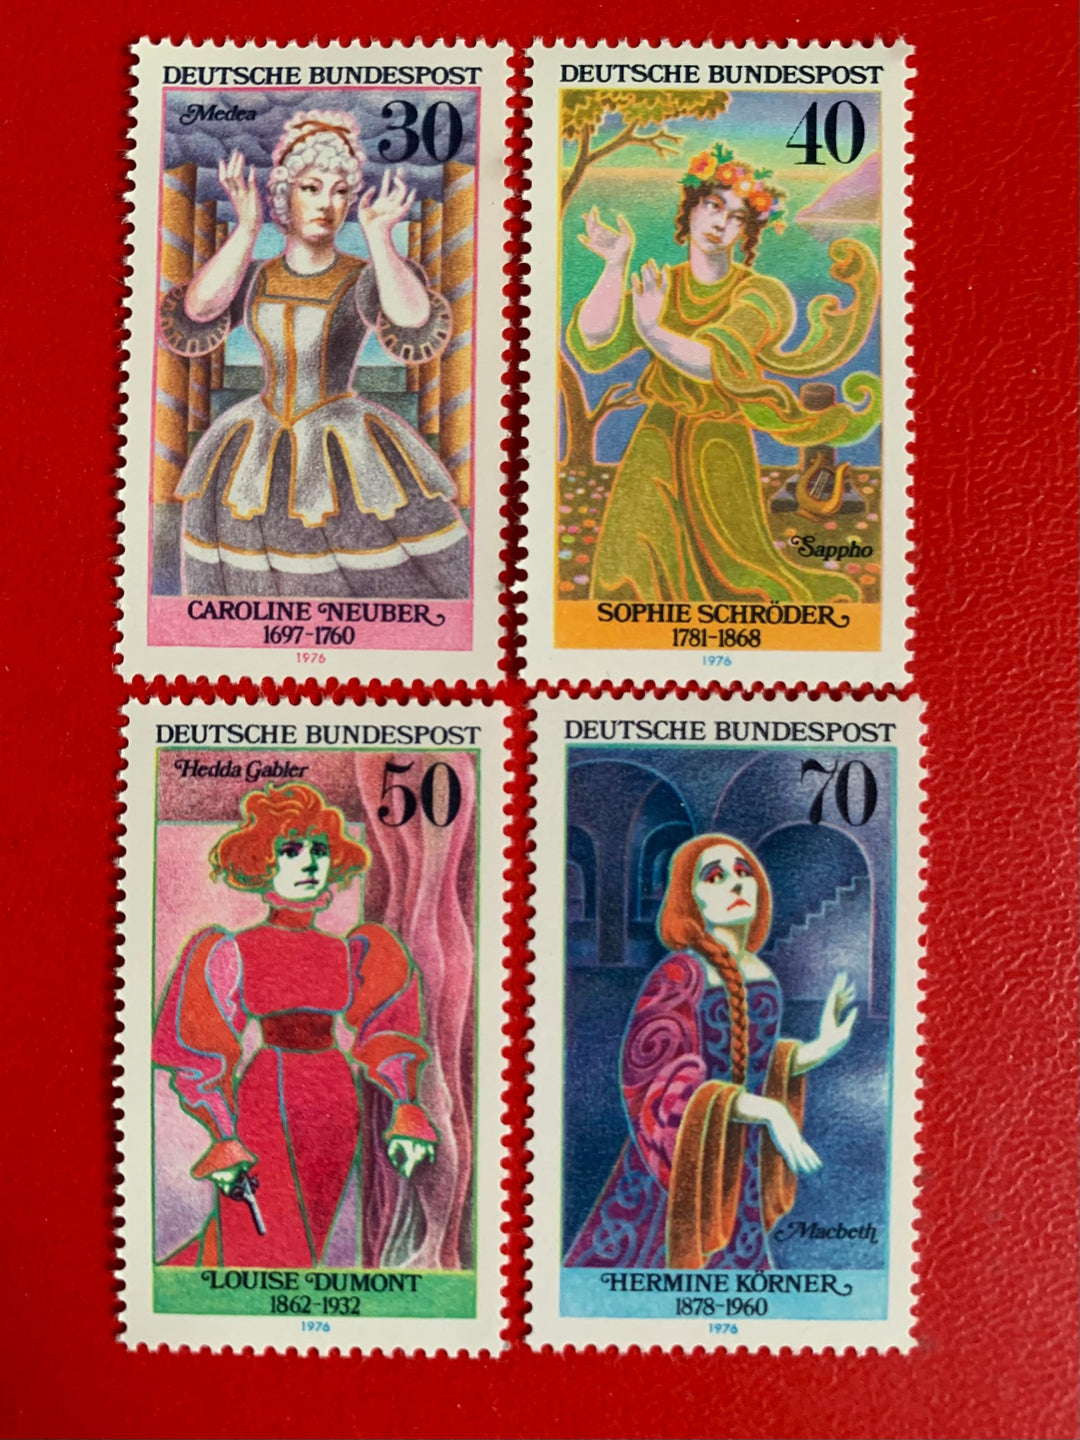 West Germany - Original Vintage Postage Stamps - Famous German Actresses- 1967